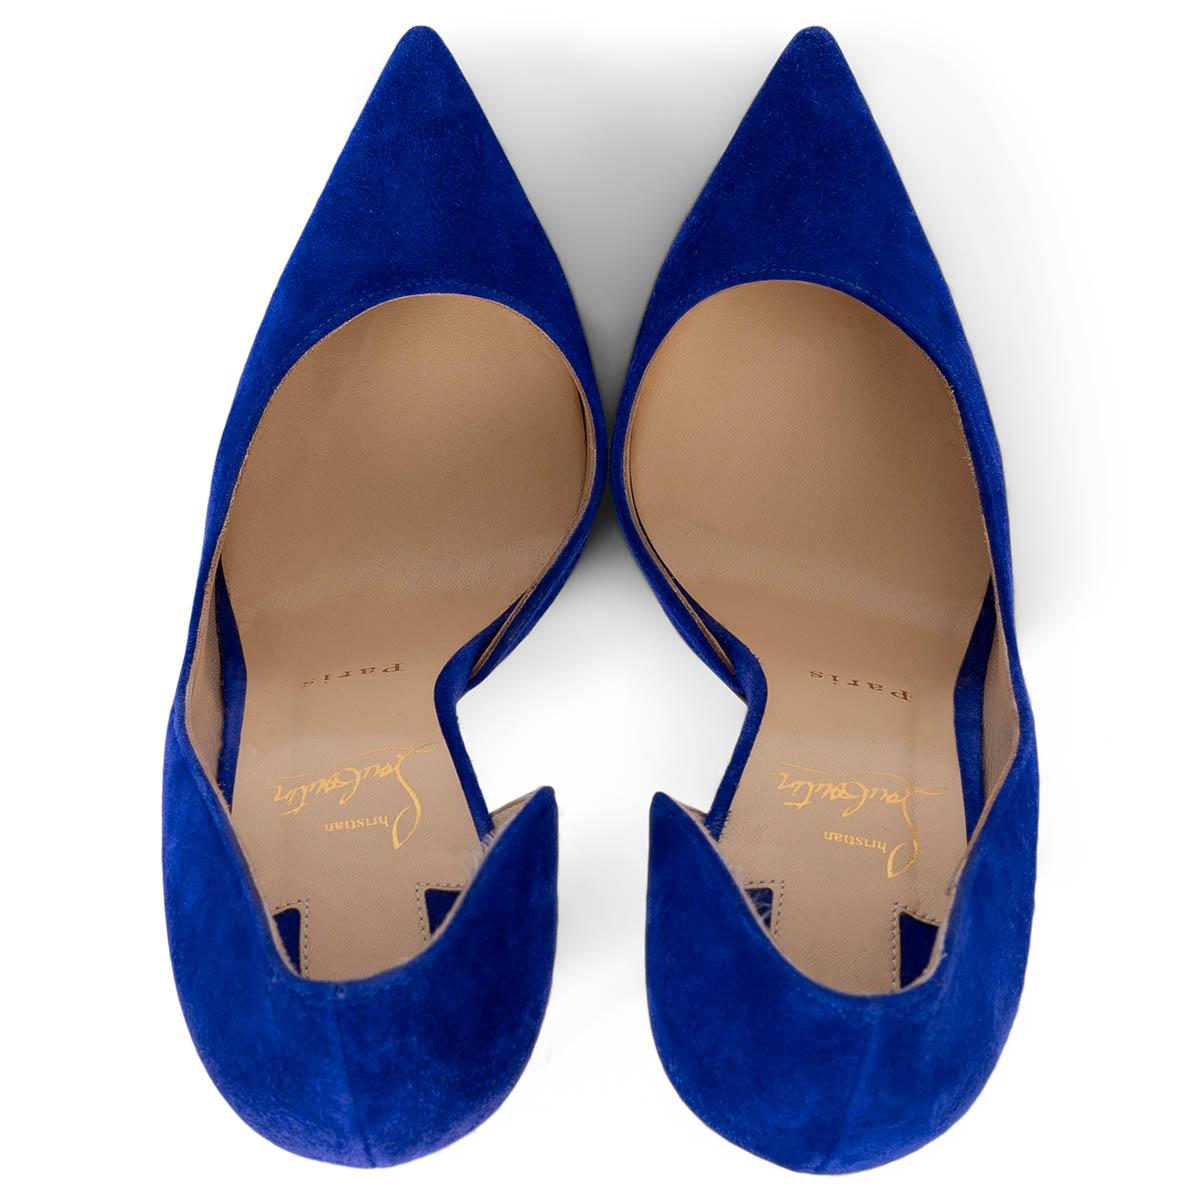 CHRISTIAN LOUBOUTIN Elixir blue suede IRIZA 100 Pumps Shoes 38.5 For Sale 2